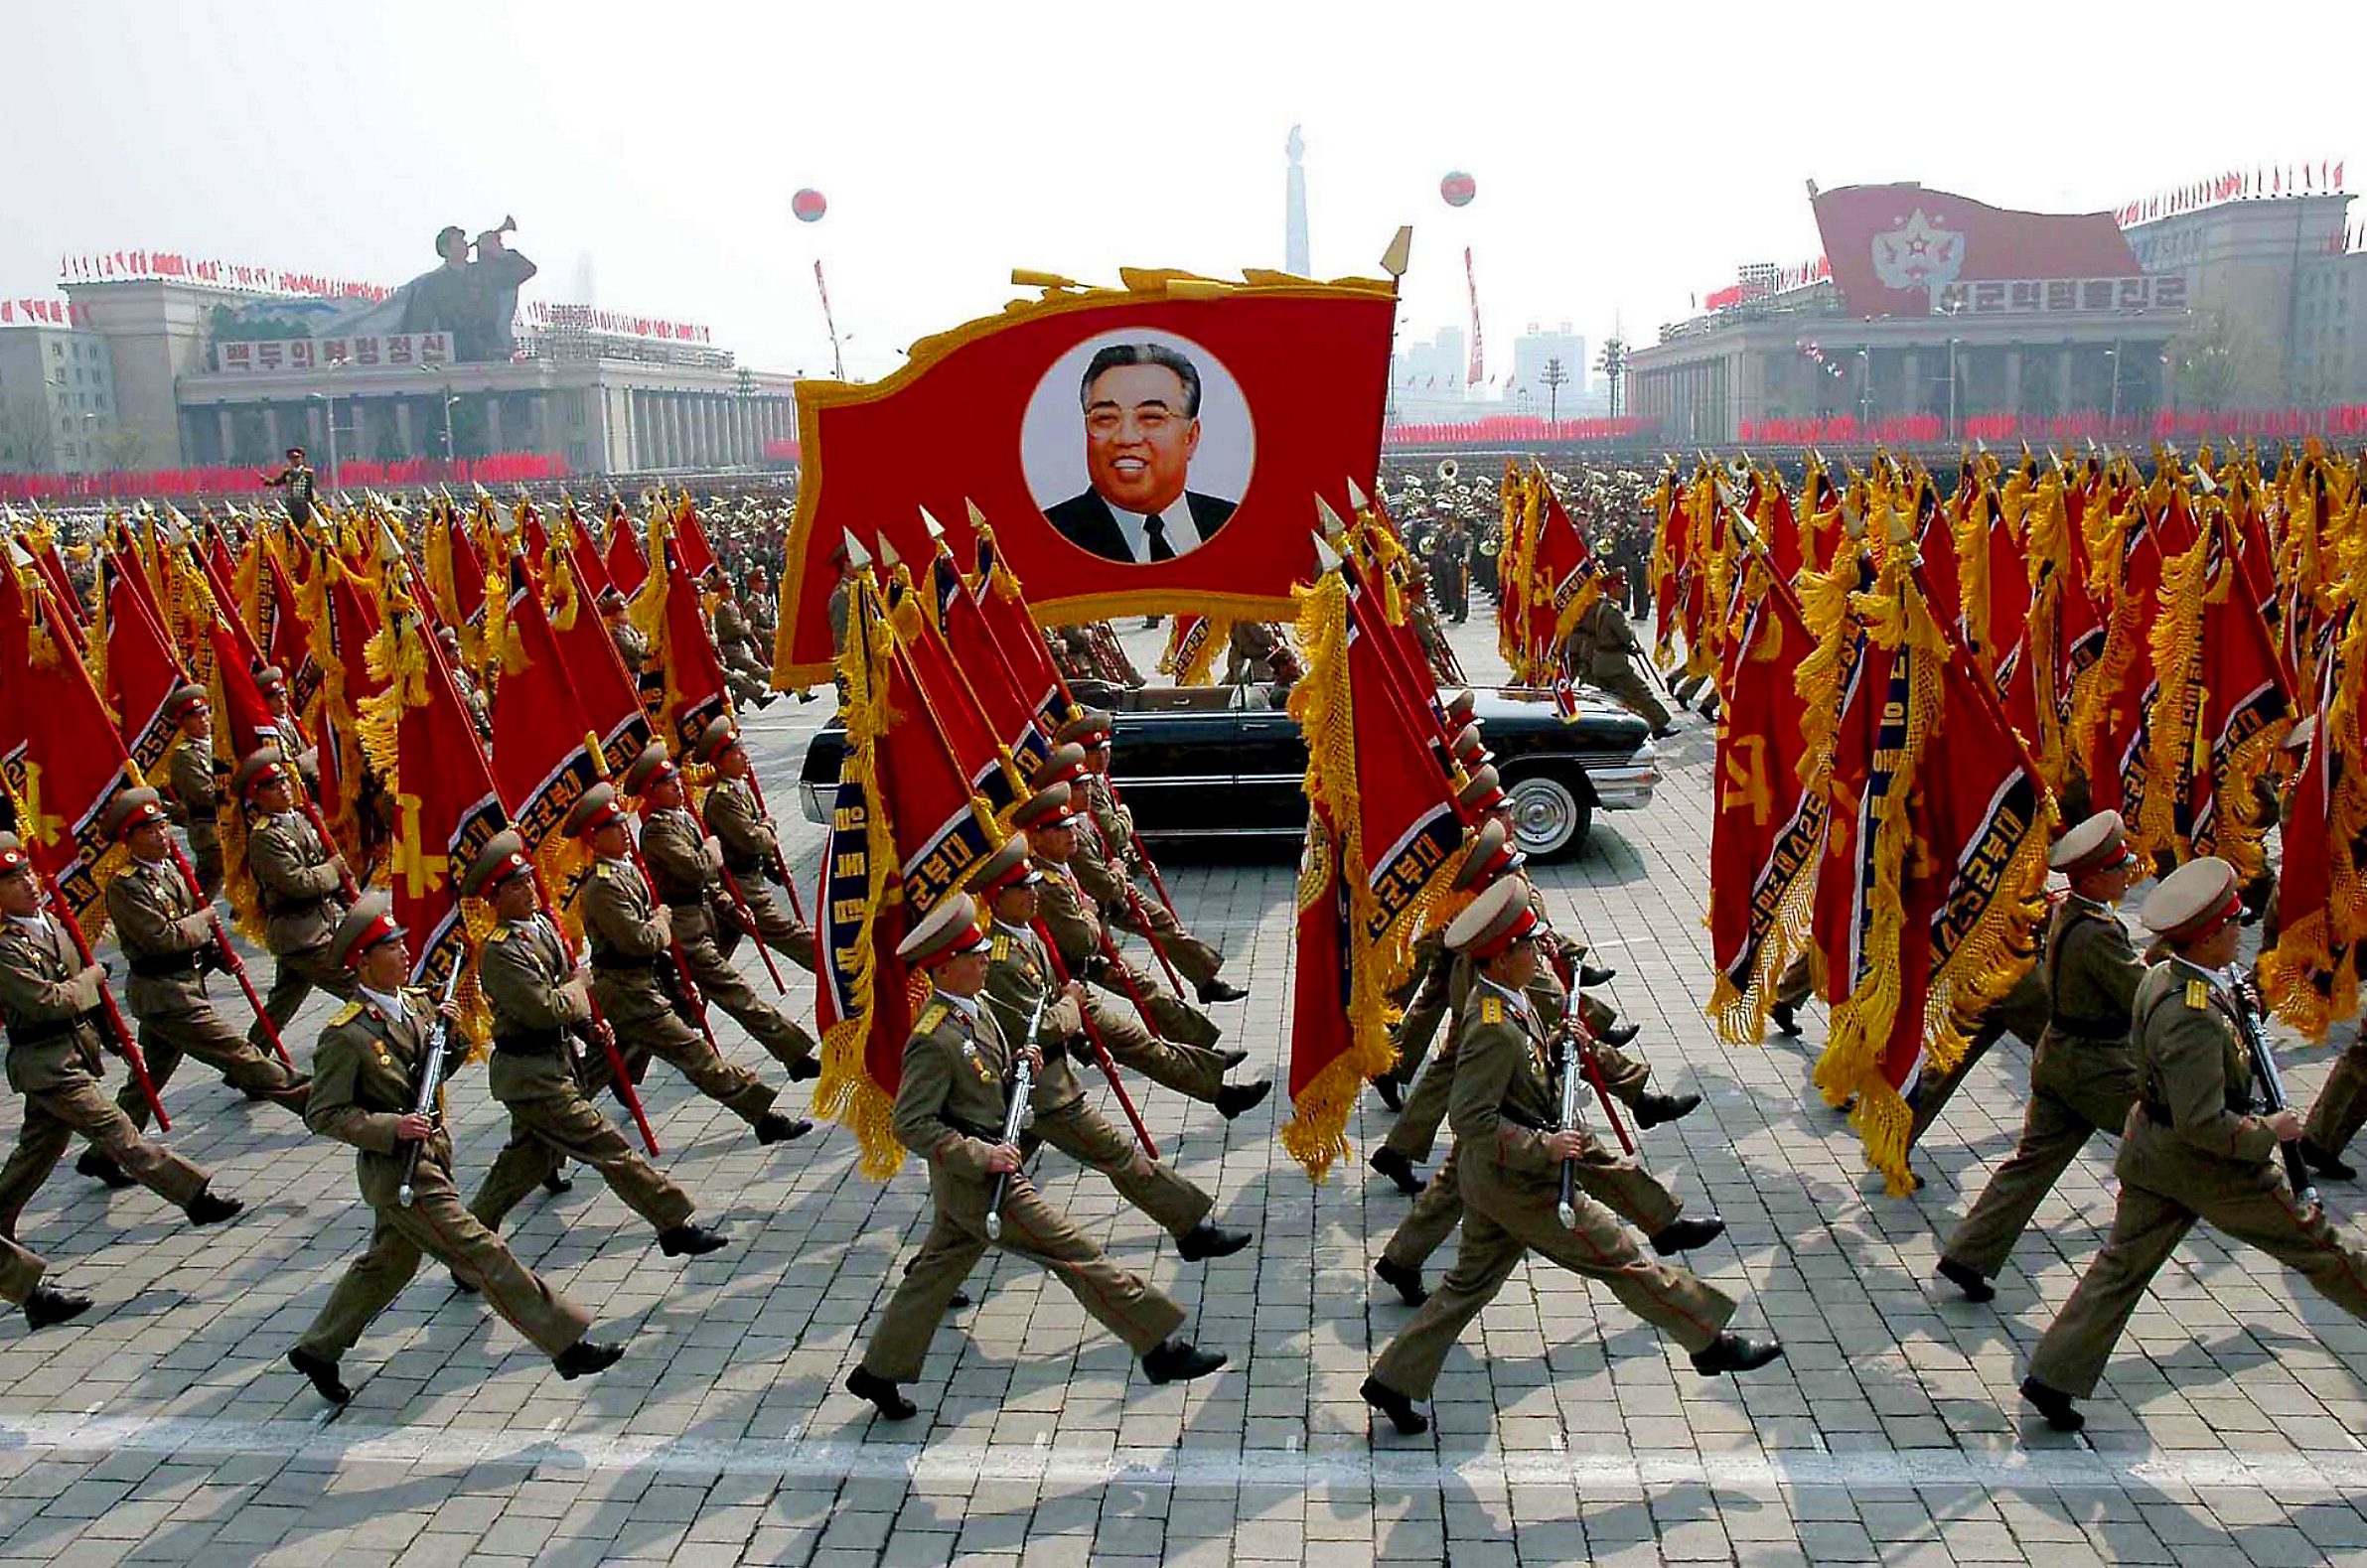 Nordkorea „überwältigender“ Militärmacht